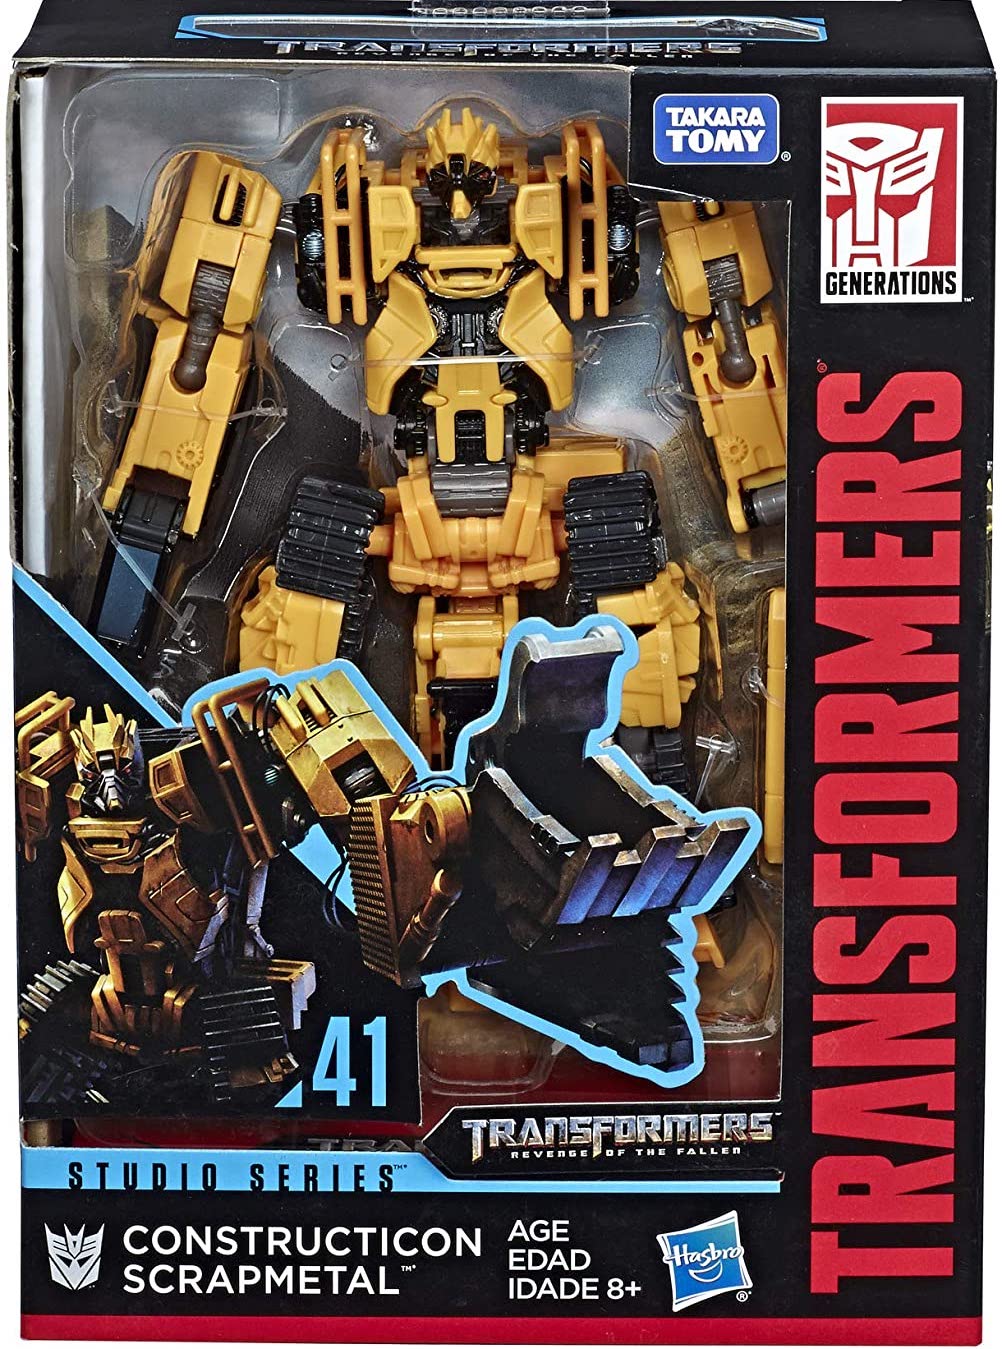 Transformers Deceptions Scrap metal Studio Series WITH BOX Bulldozer 6001-8C